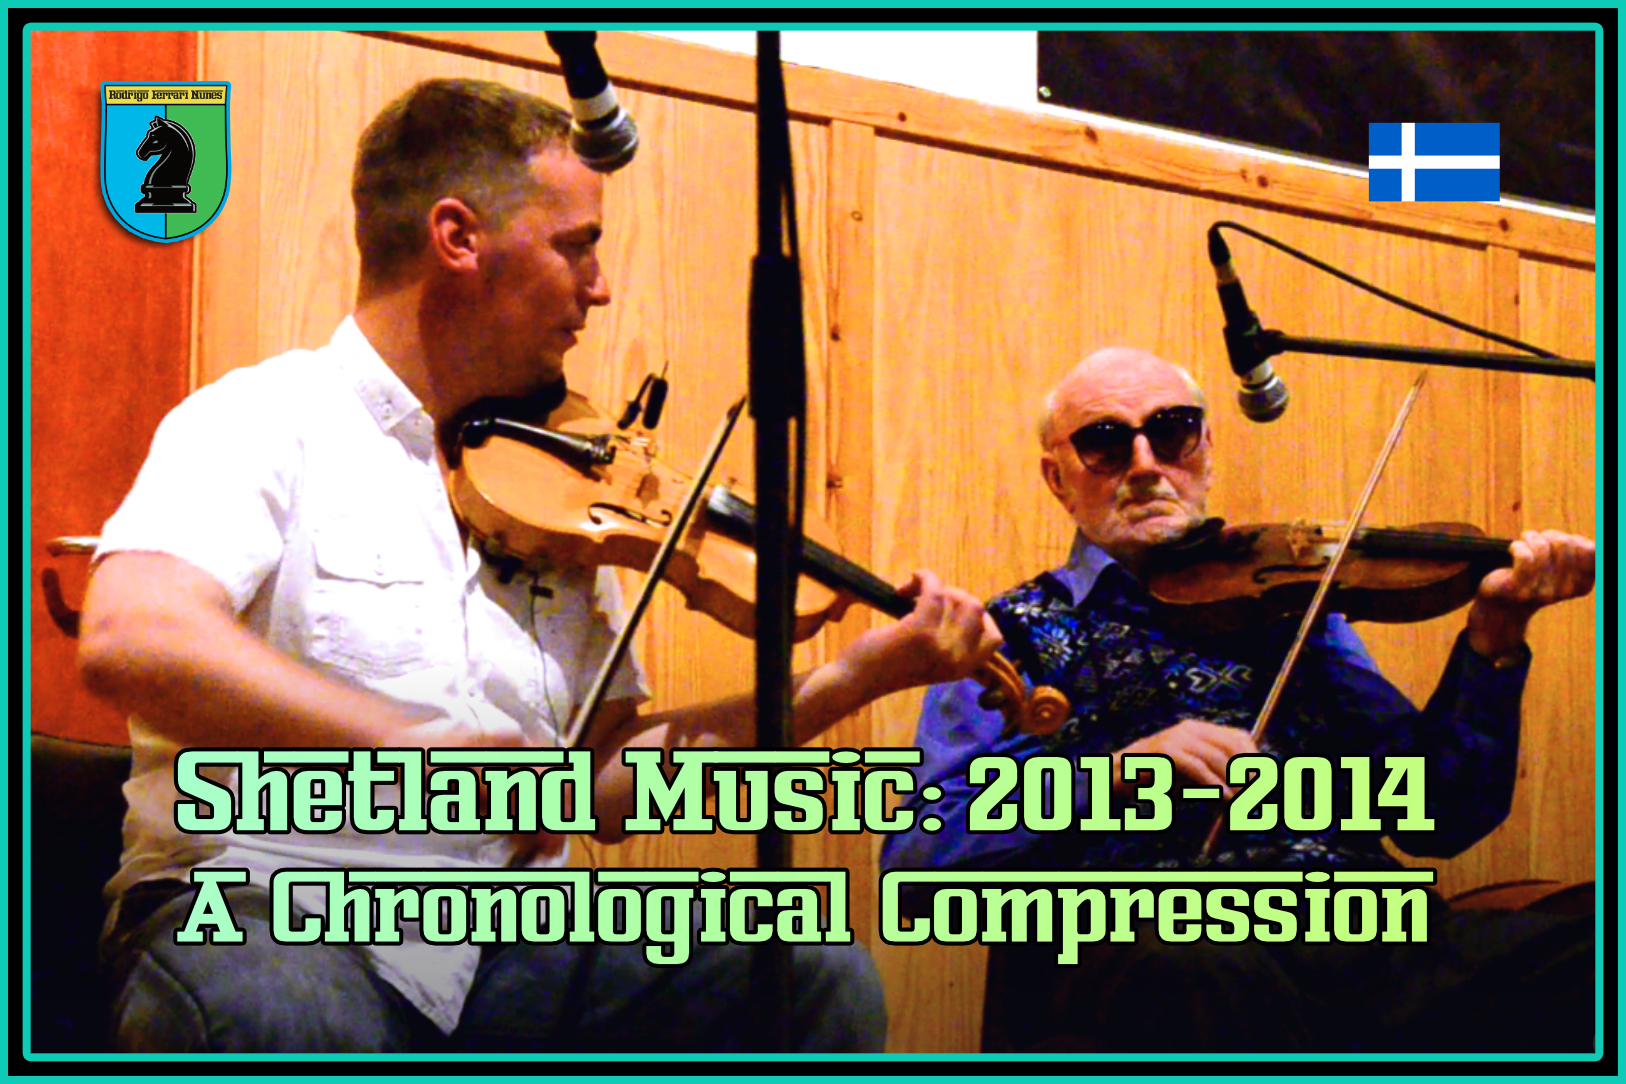 Shetland Music: 2013-2014 - A Chronological Compression